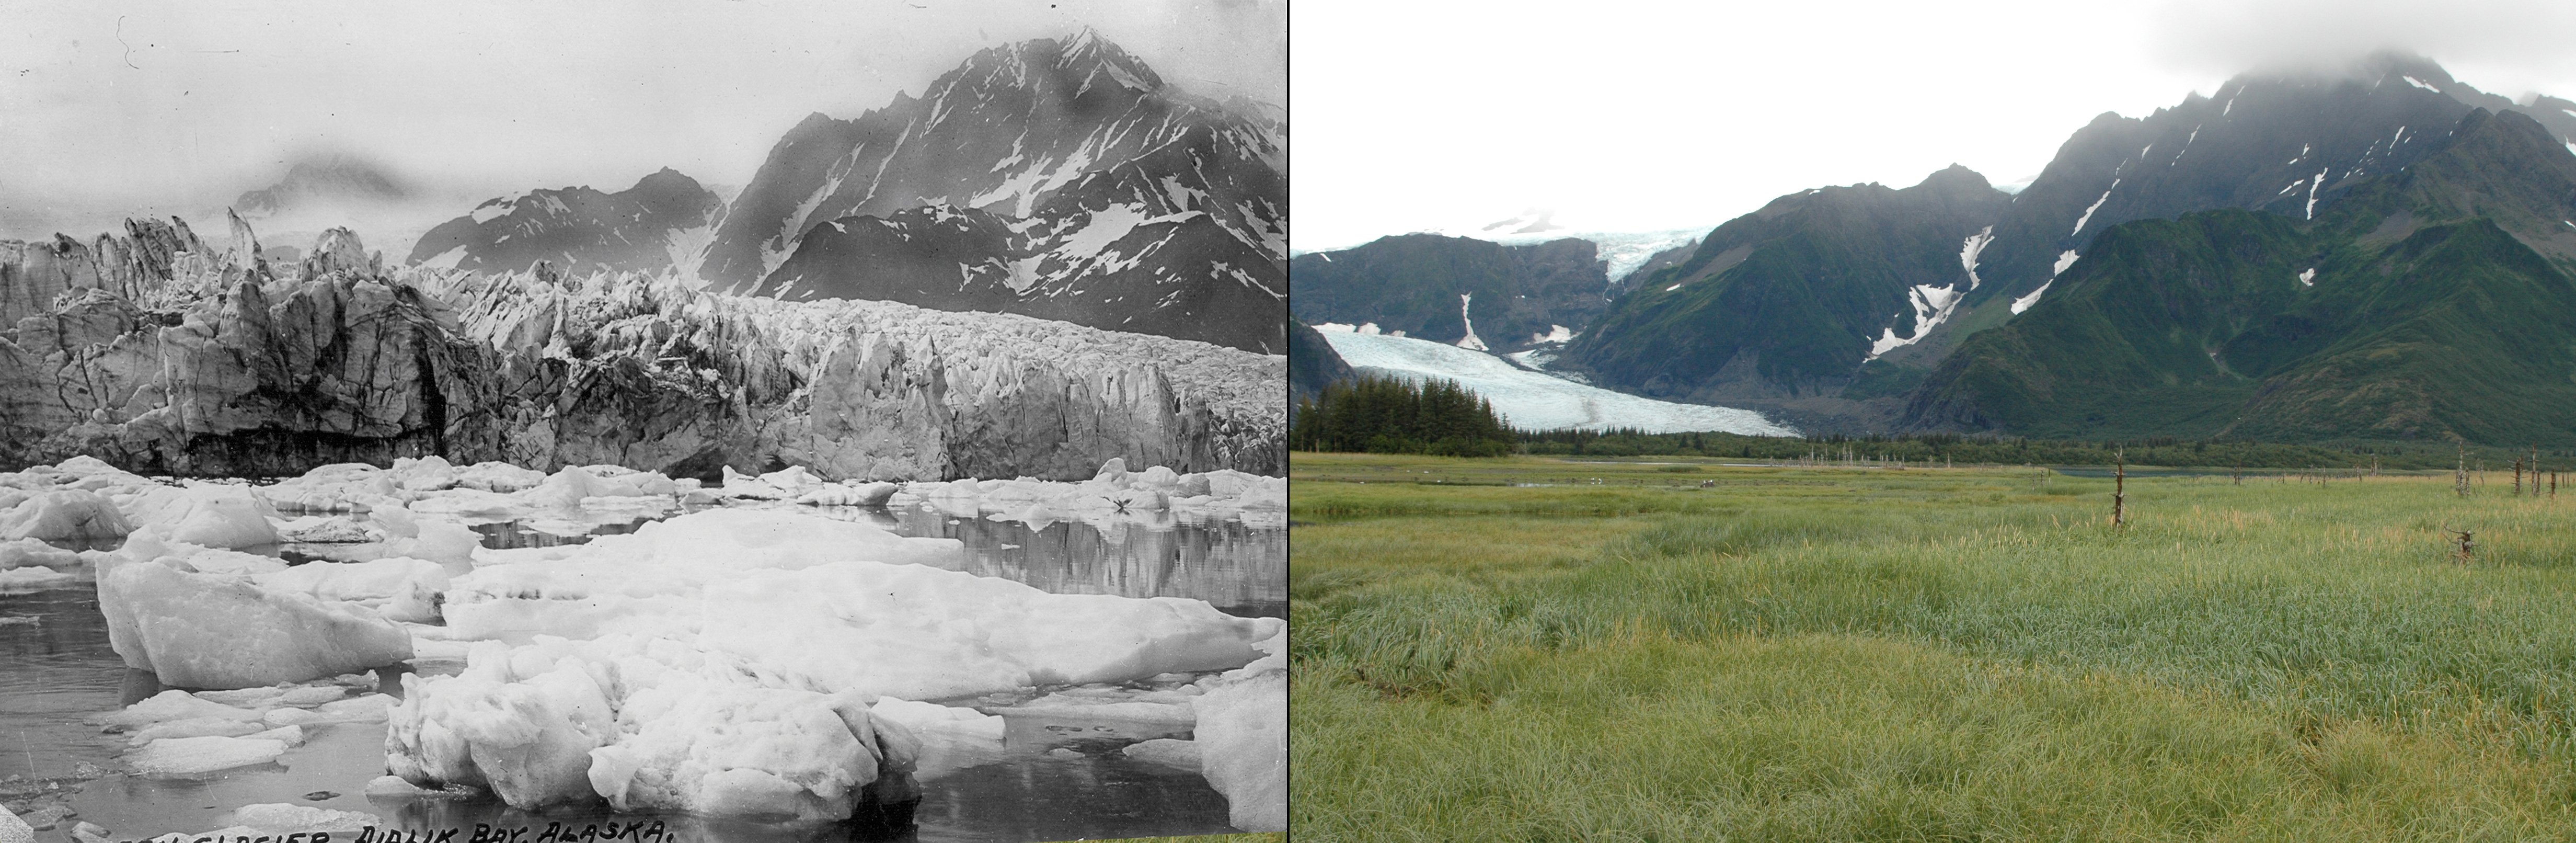 http://climate.nasa.gov/system/gallery_images/large/Icemelt_Alaska8.jpg